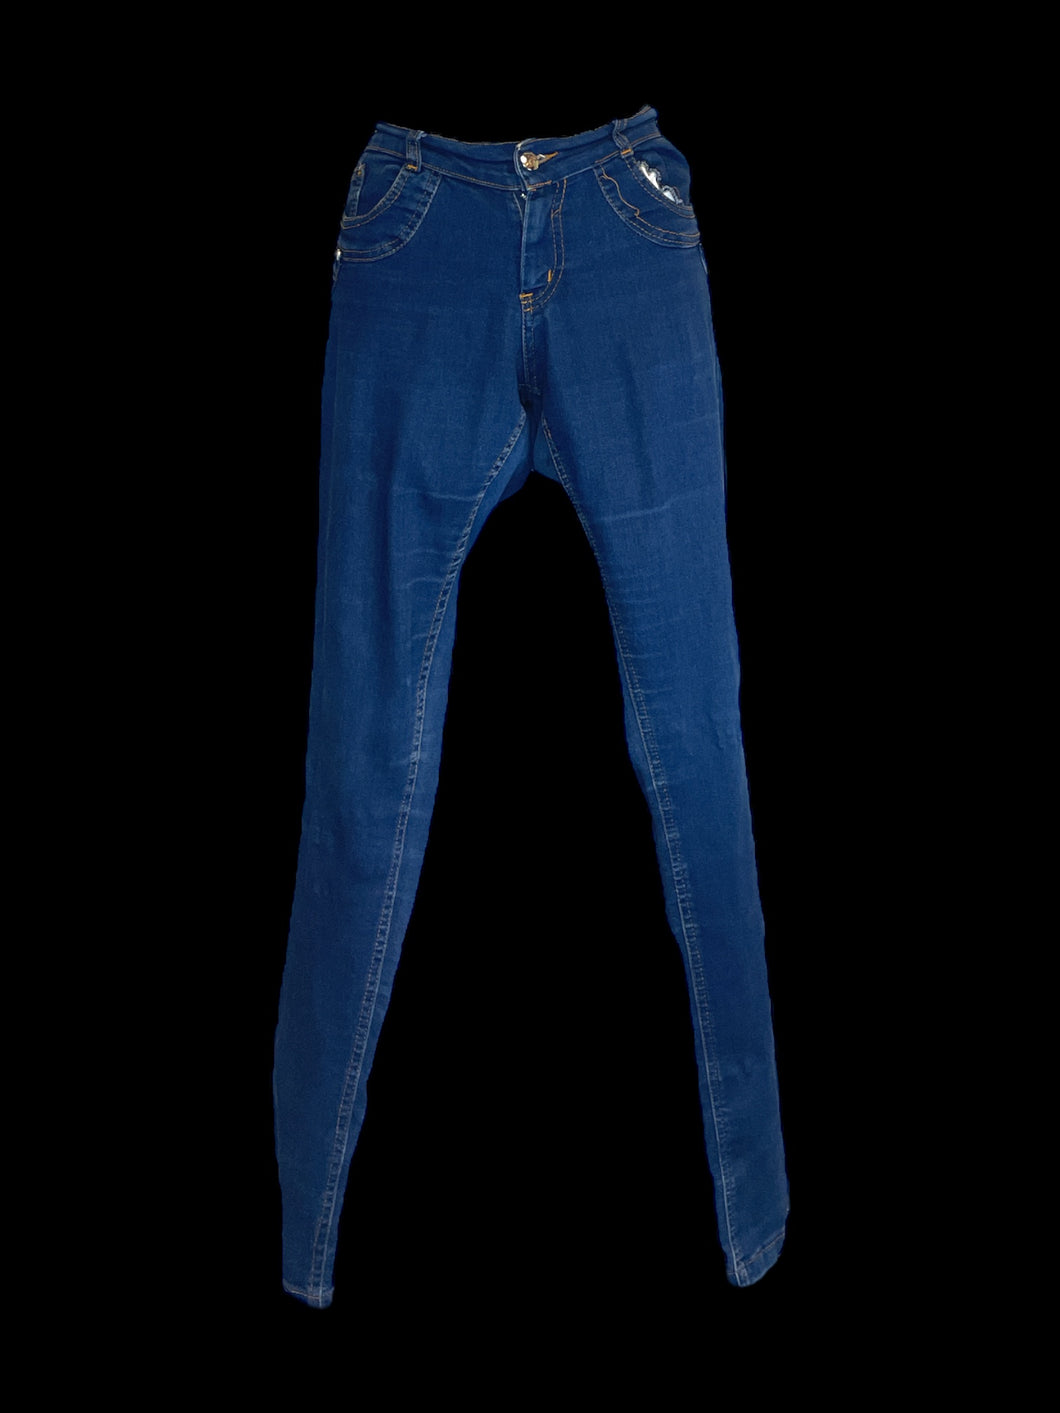 M Blue denim pants w/ orange stitching, belt loops, pockets, & button/zipper closure